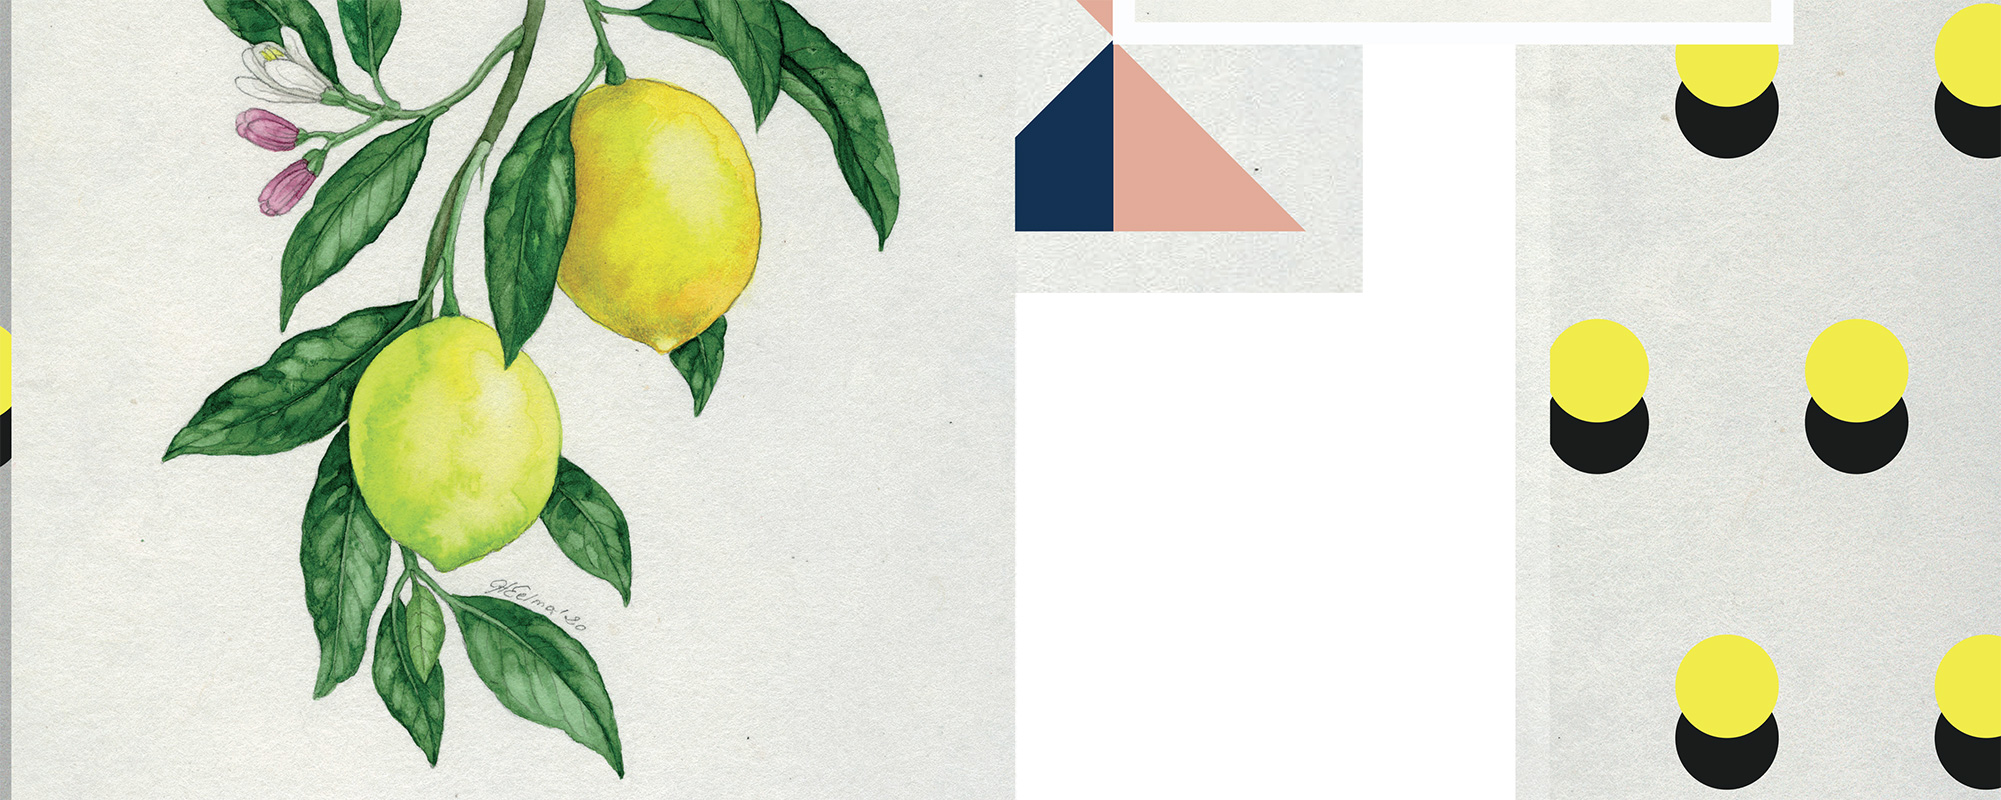 Fruity Geometric Art Gallery – White